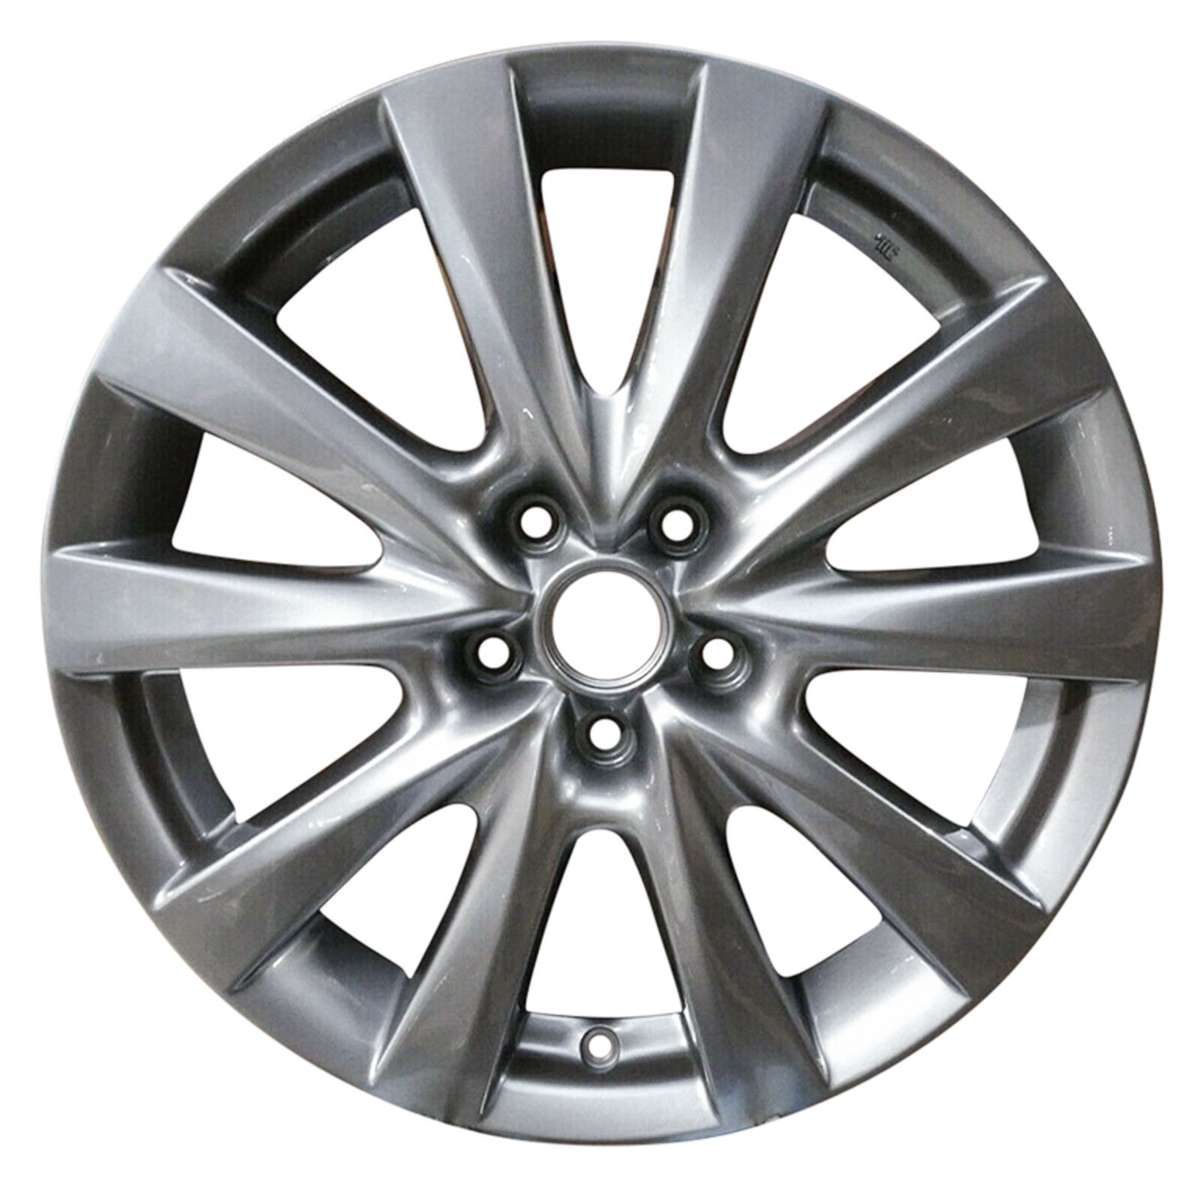 2020 Mazda 3 New 18" Replacement Wheel Rim RW64974C